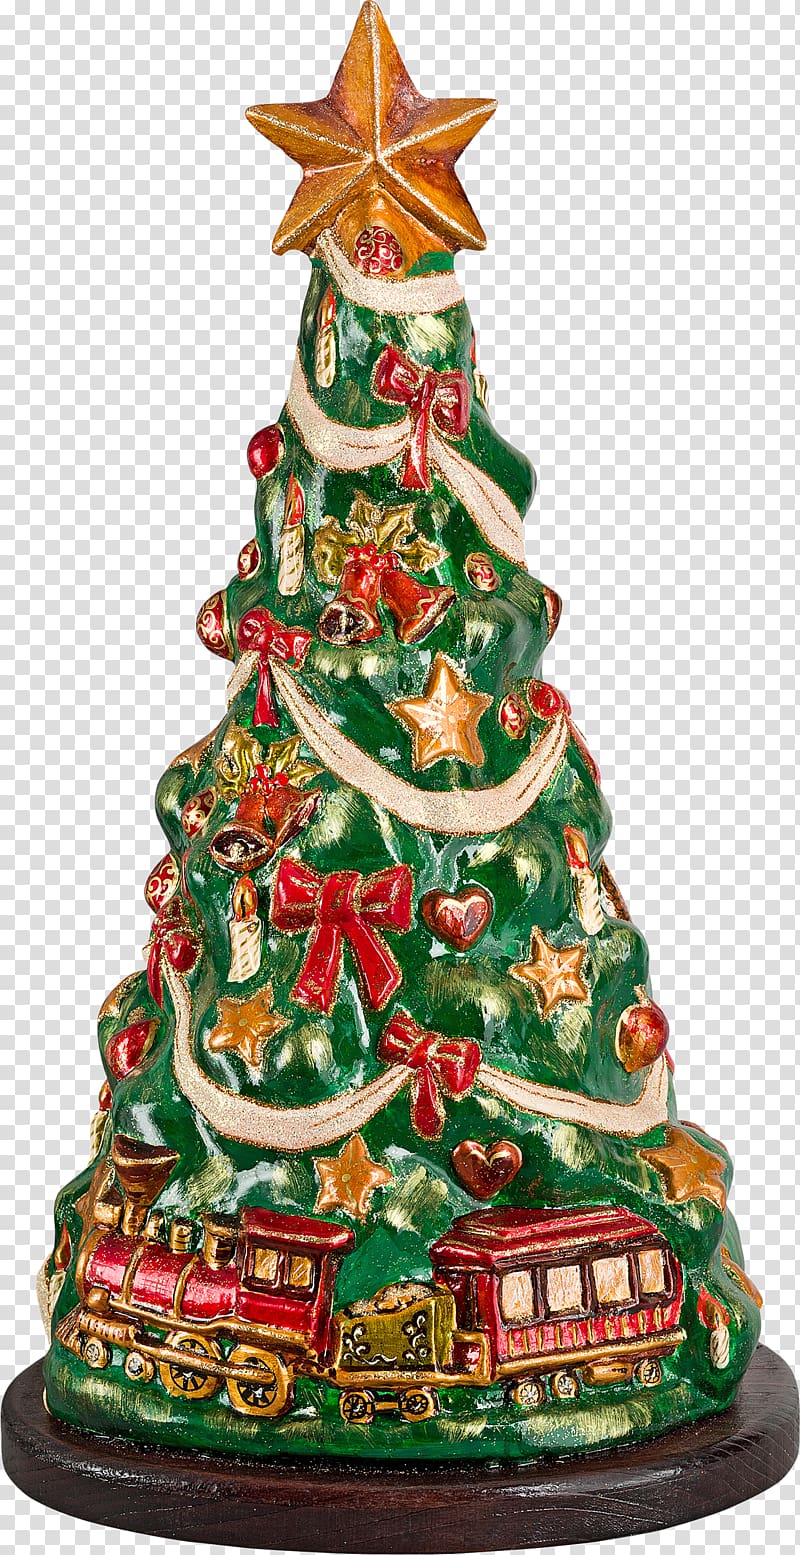 Christmas tree Christmas ornament Santa Claus, Christmas Dress Up transparent background PNG clipart